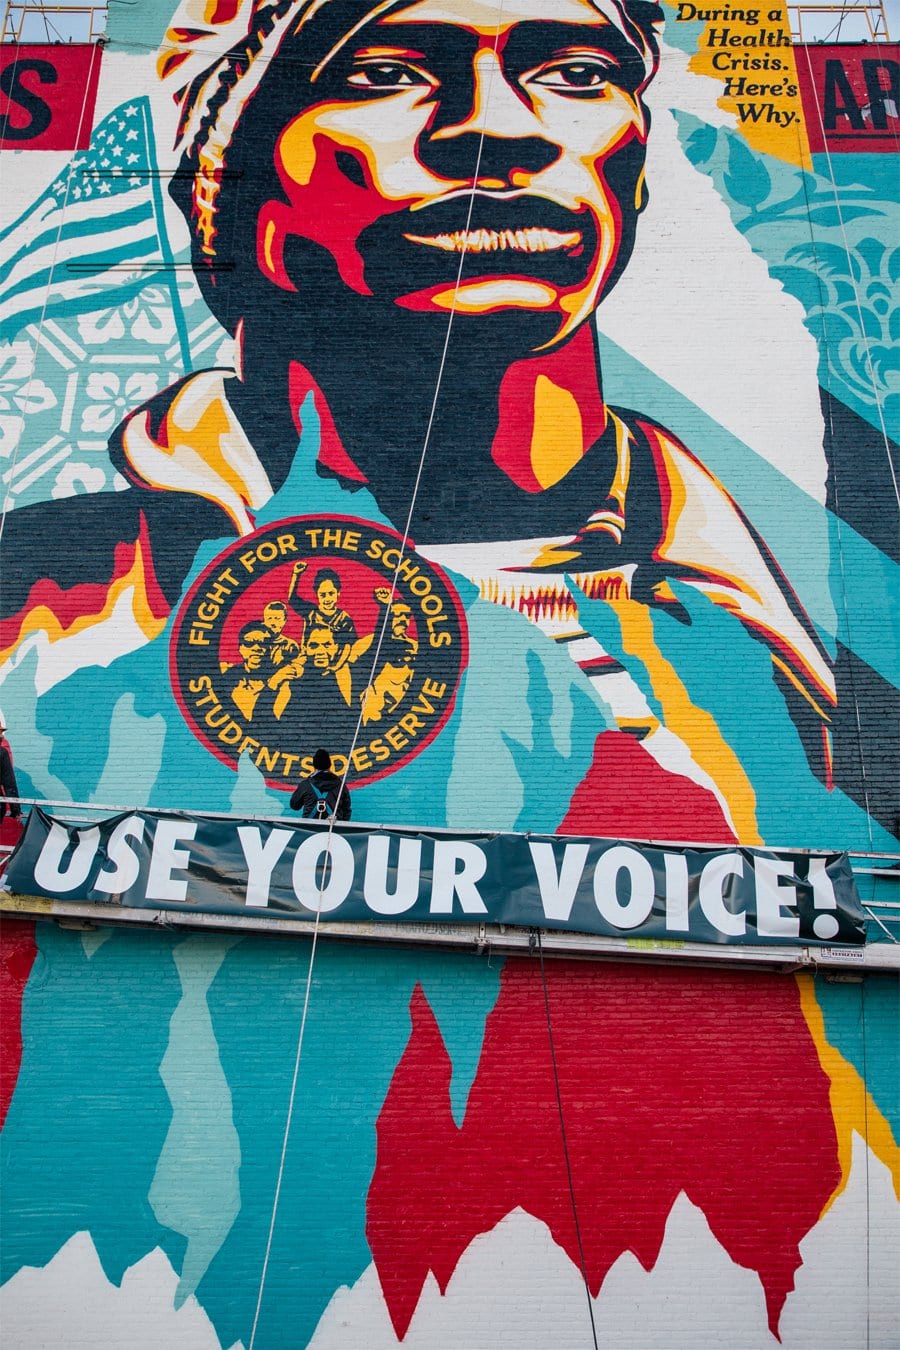 O novo mural de Shepard Fairey ("Obey") pelo direito ao voto